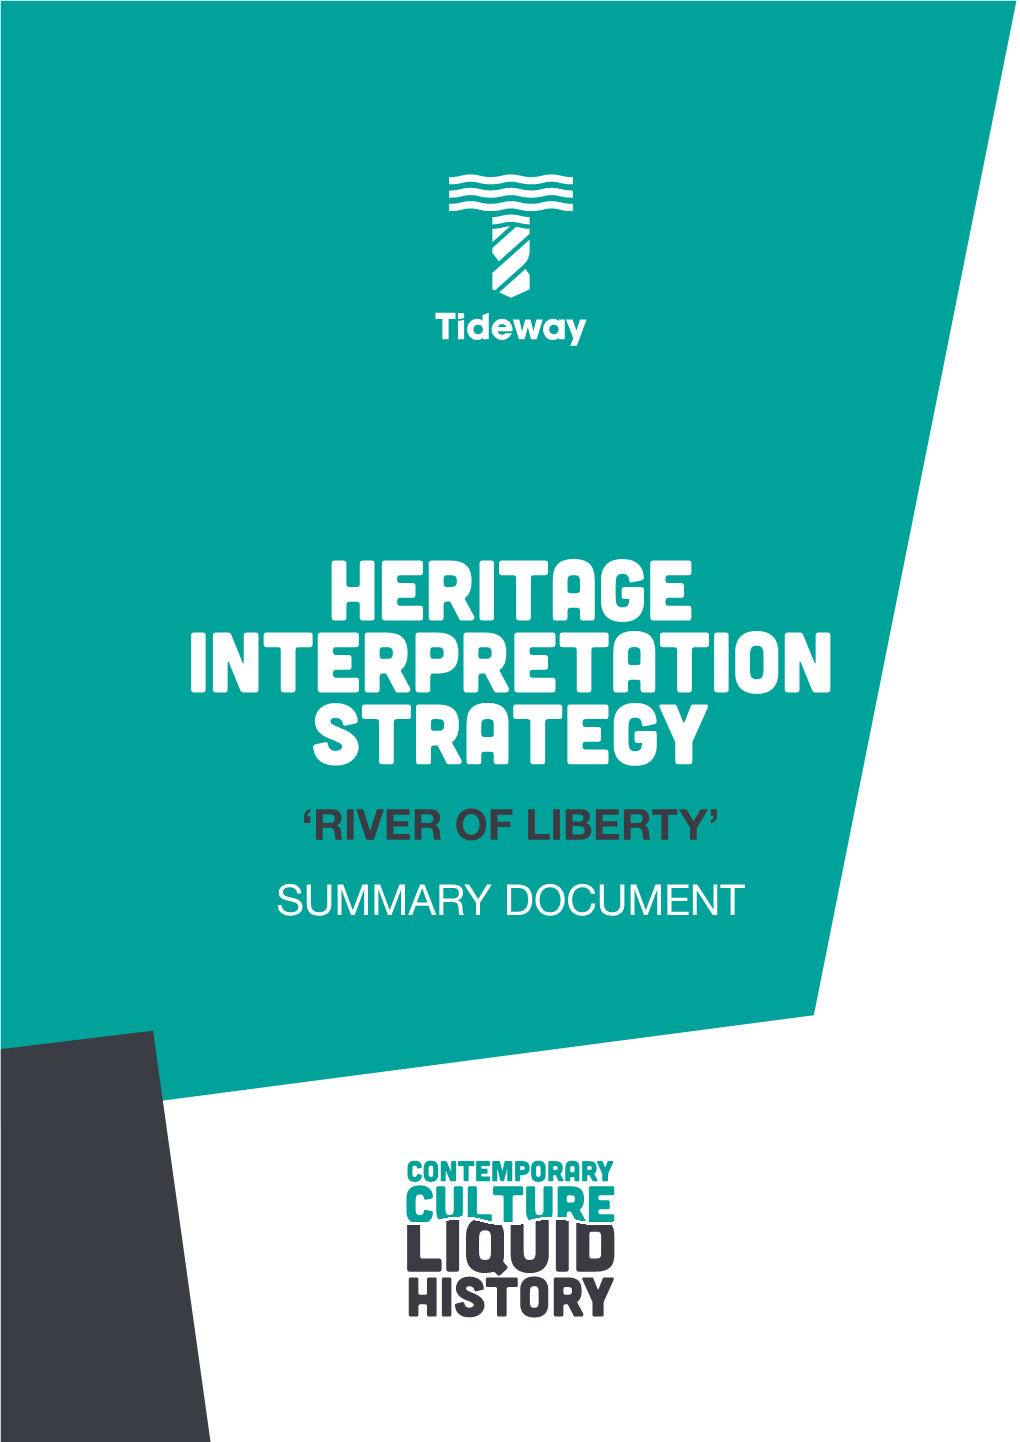 Tideway Heritage Interpretation Strategy